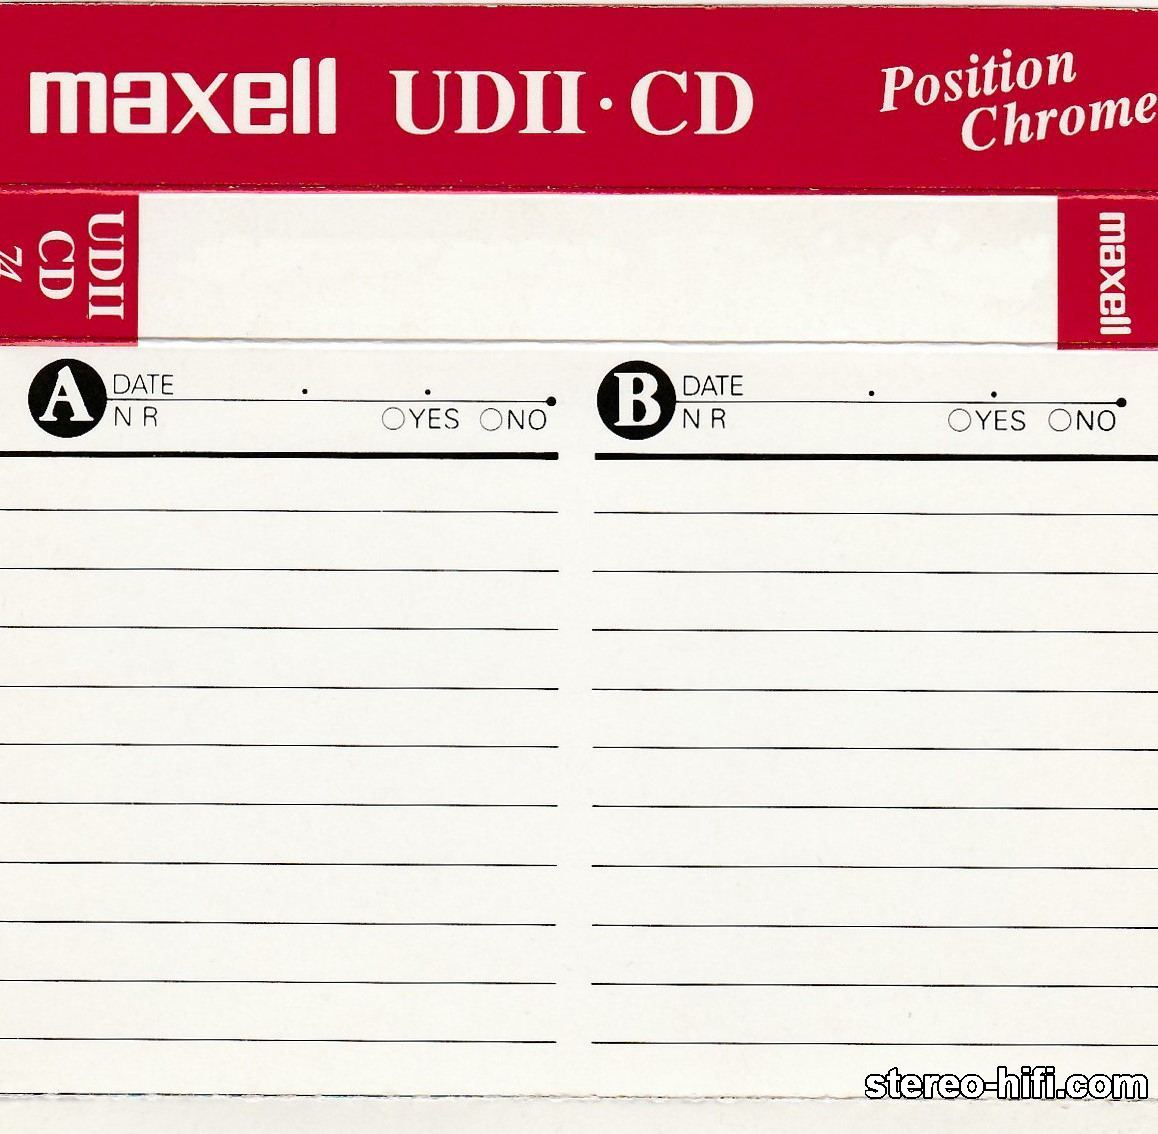 Maxell UDII-CD C74 - 1994-96